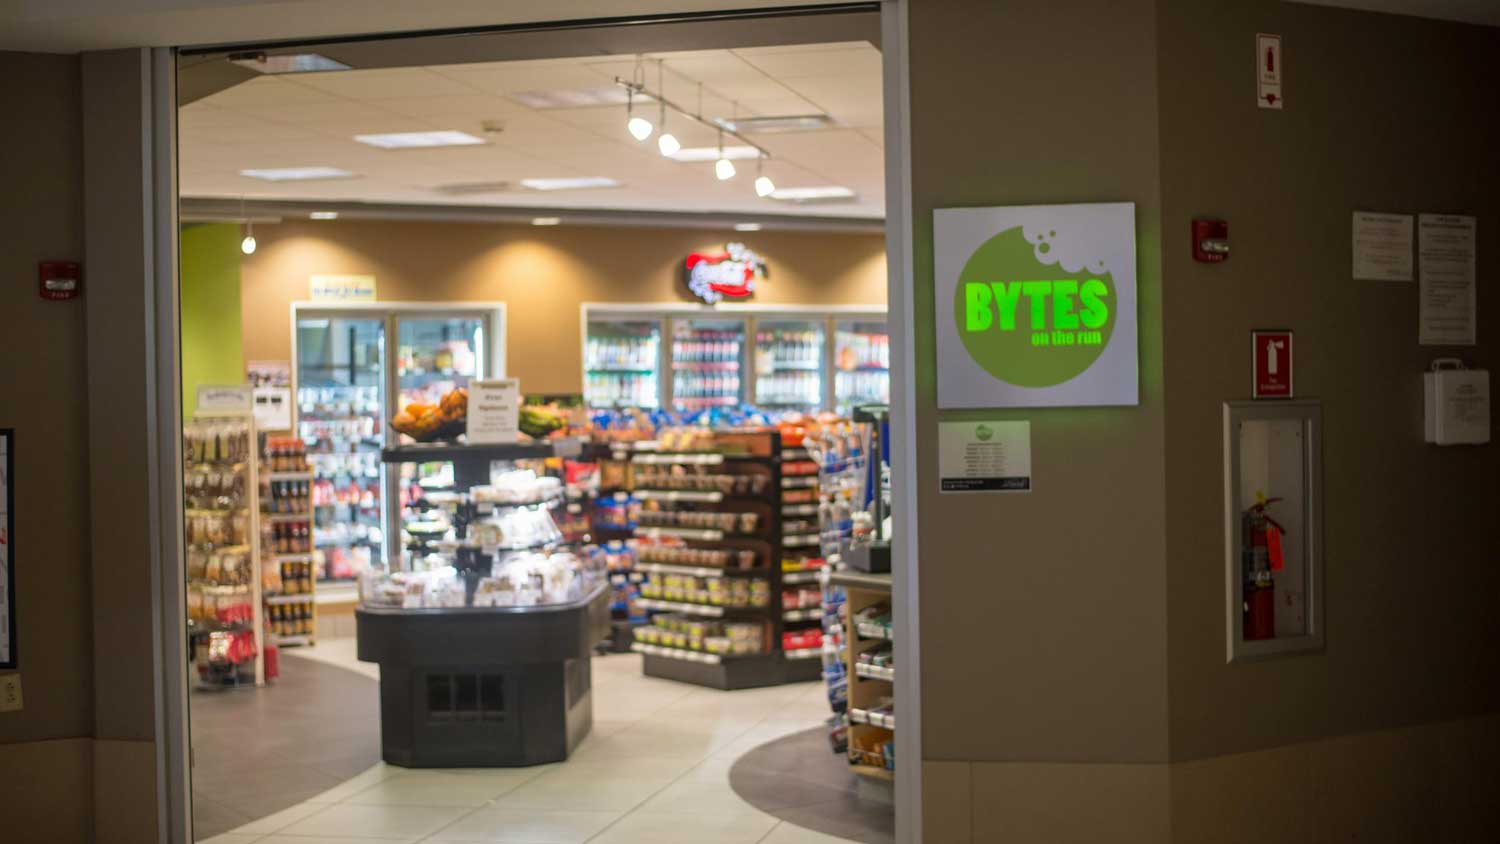 Interior of Bytes store showing racks of snacks